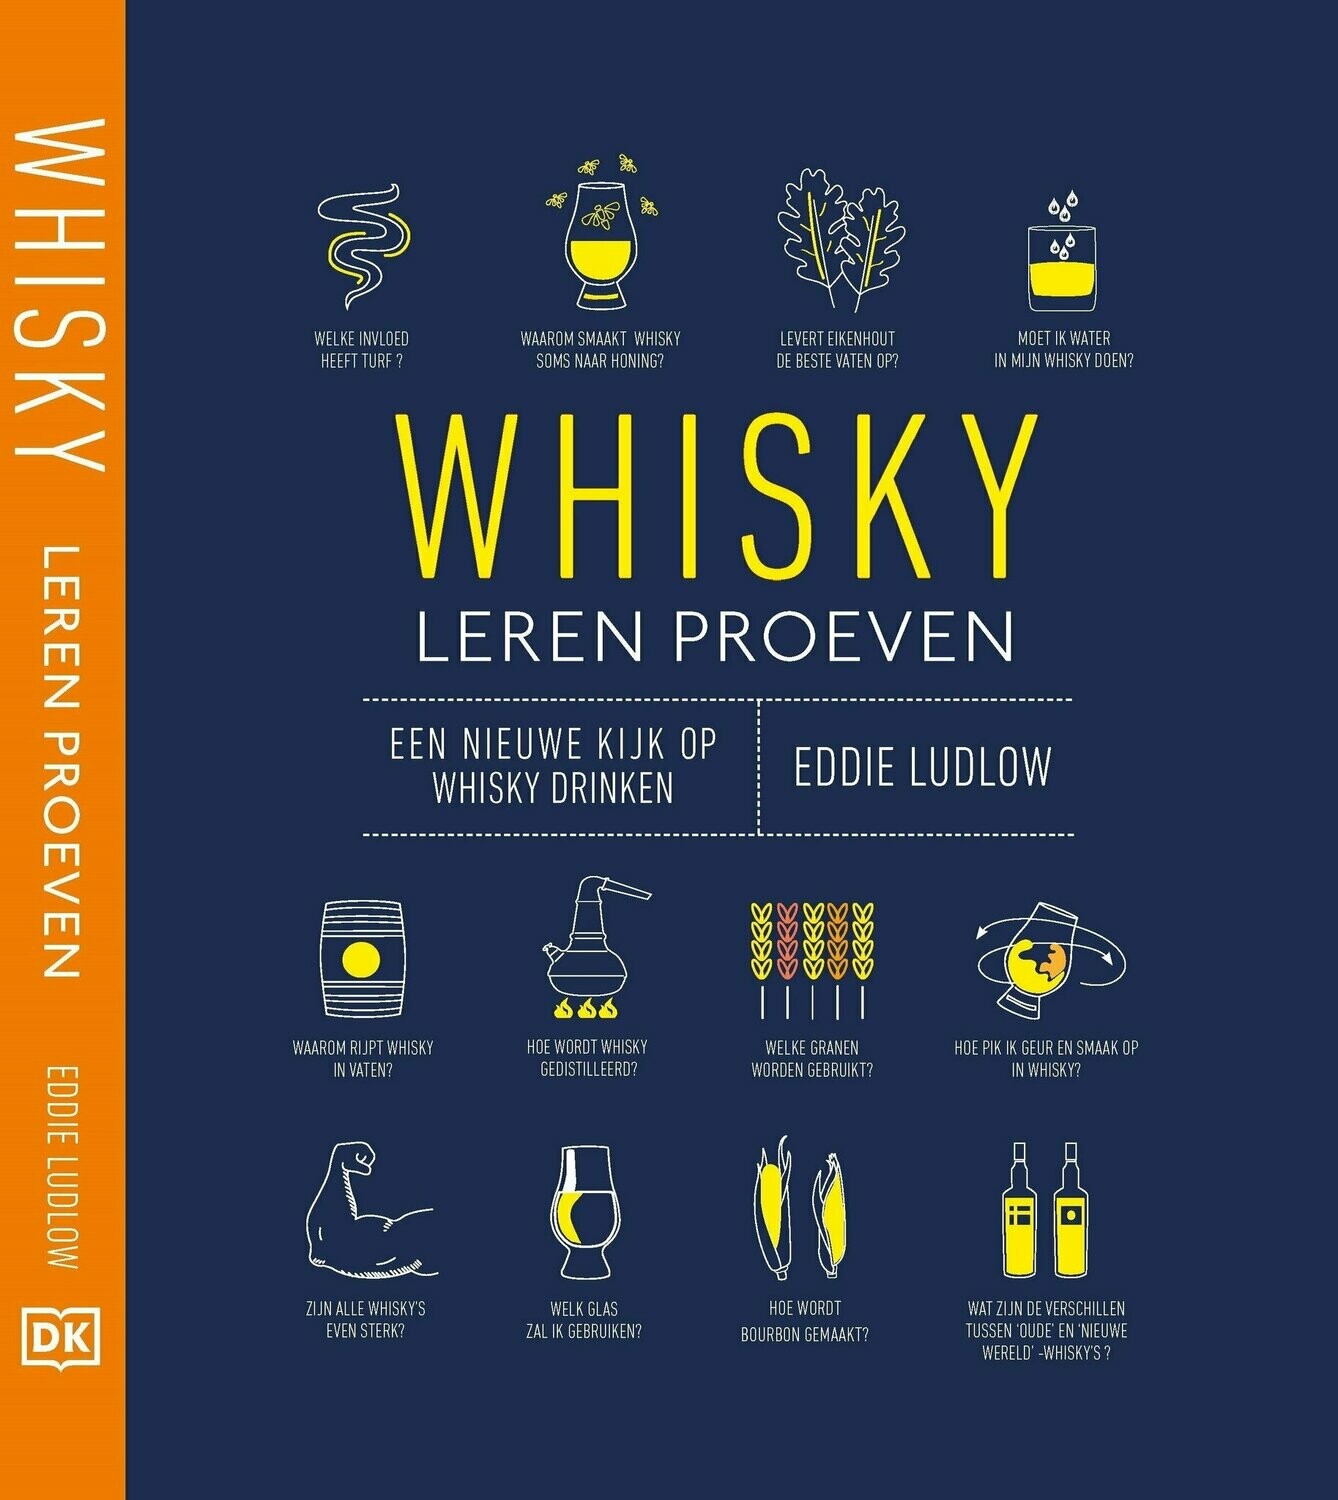 Whisky leren proeven - Eddie Ludlow